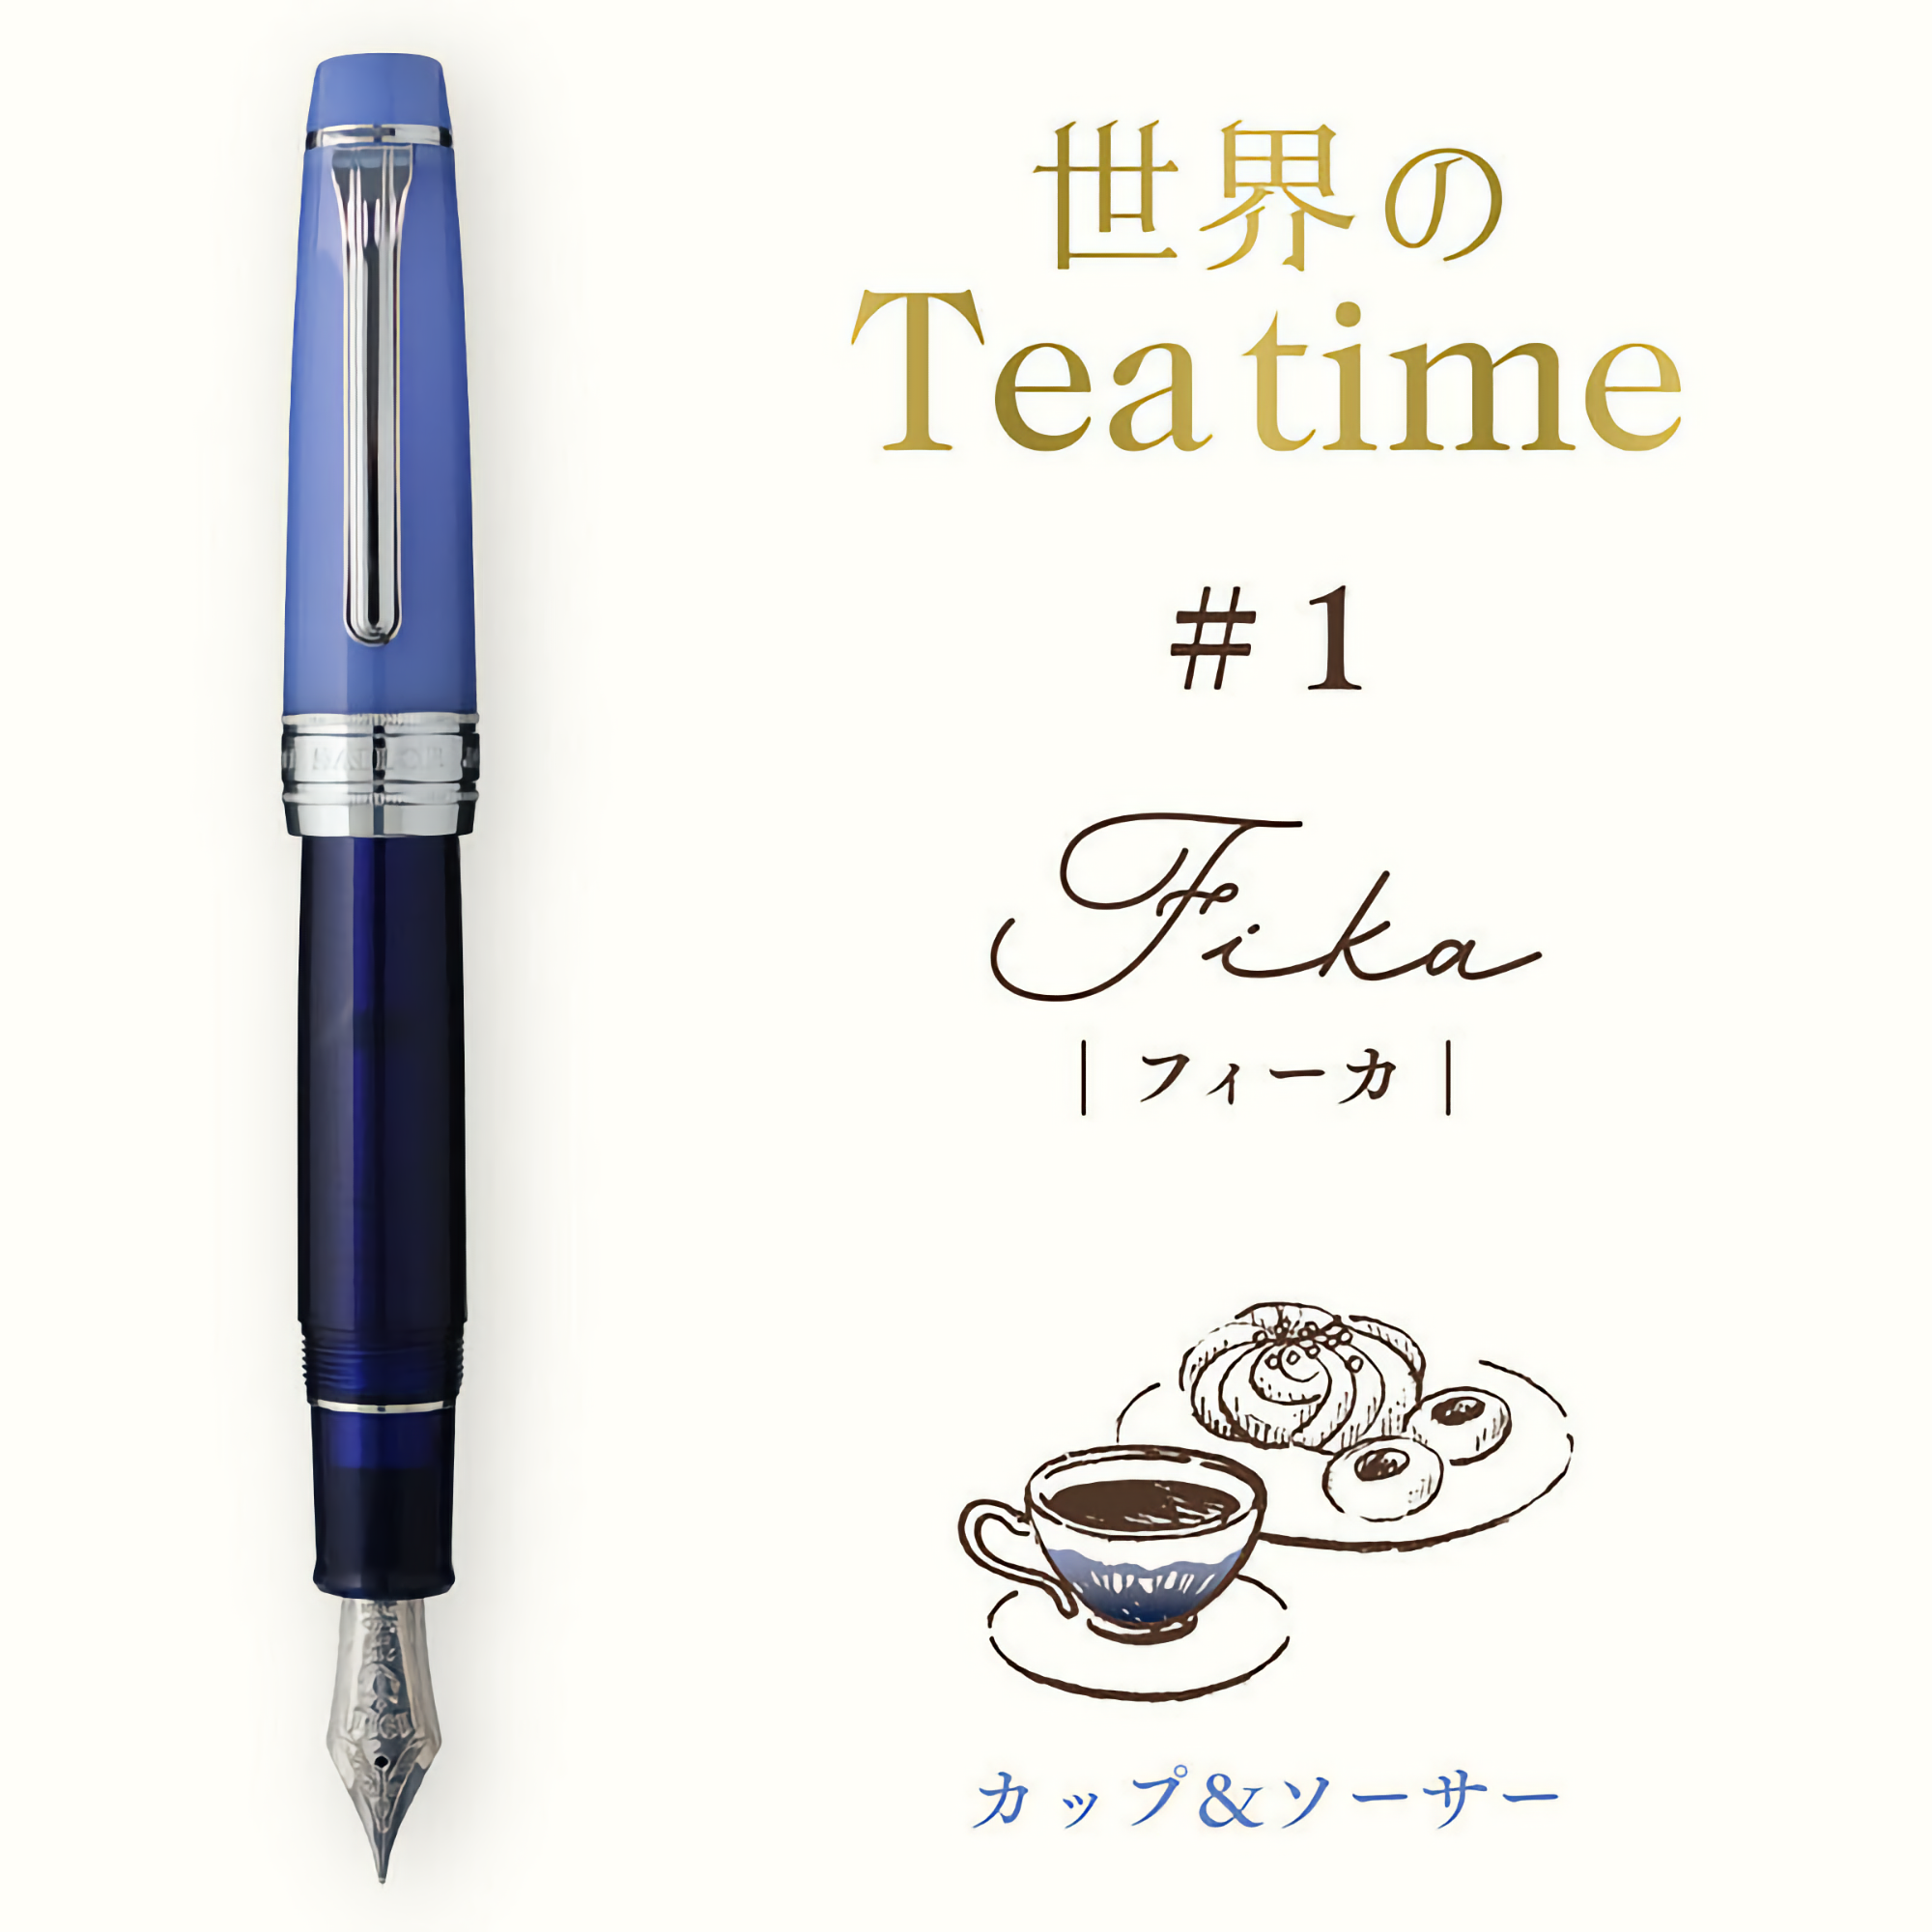 Sailor Professional Gear – Tea Time Fika Cup Limited Edition